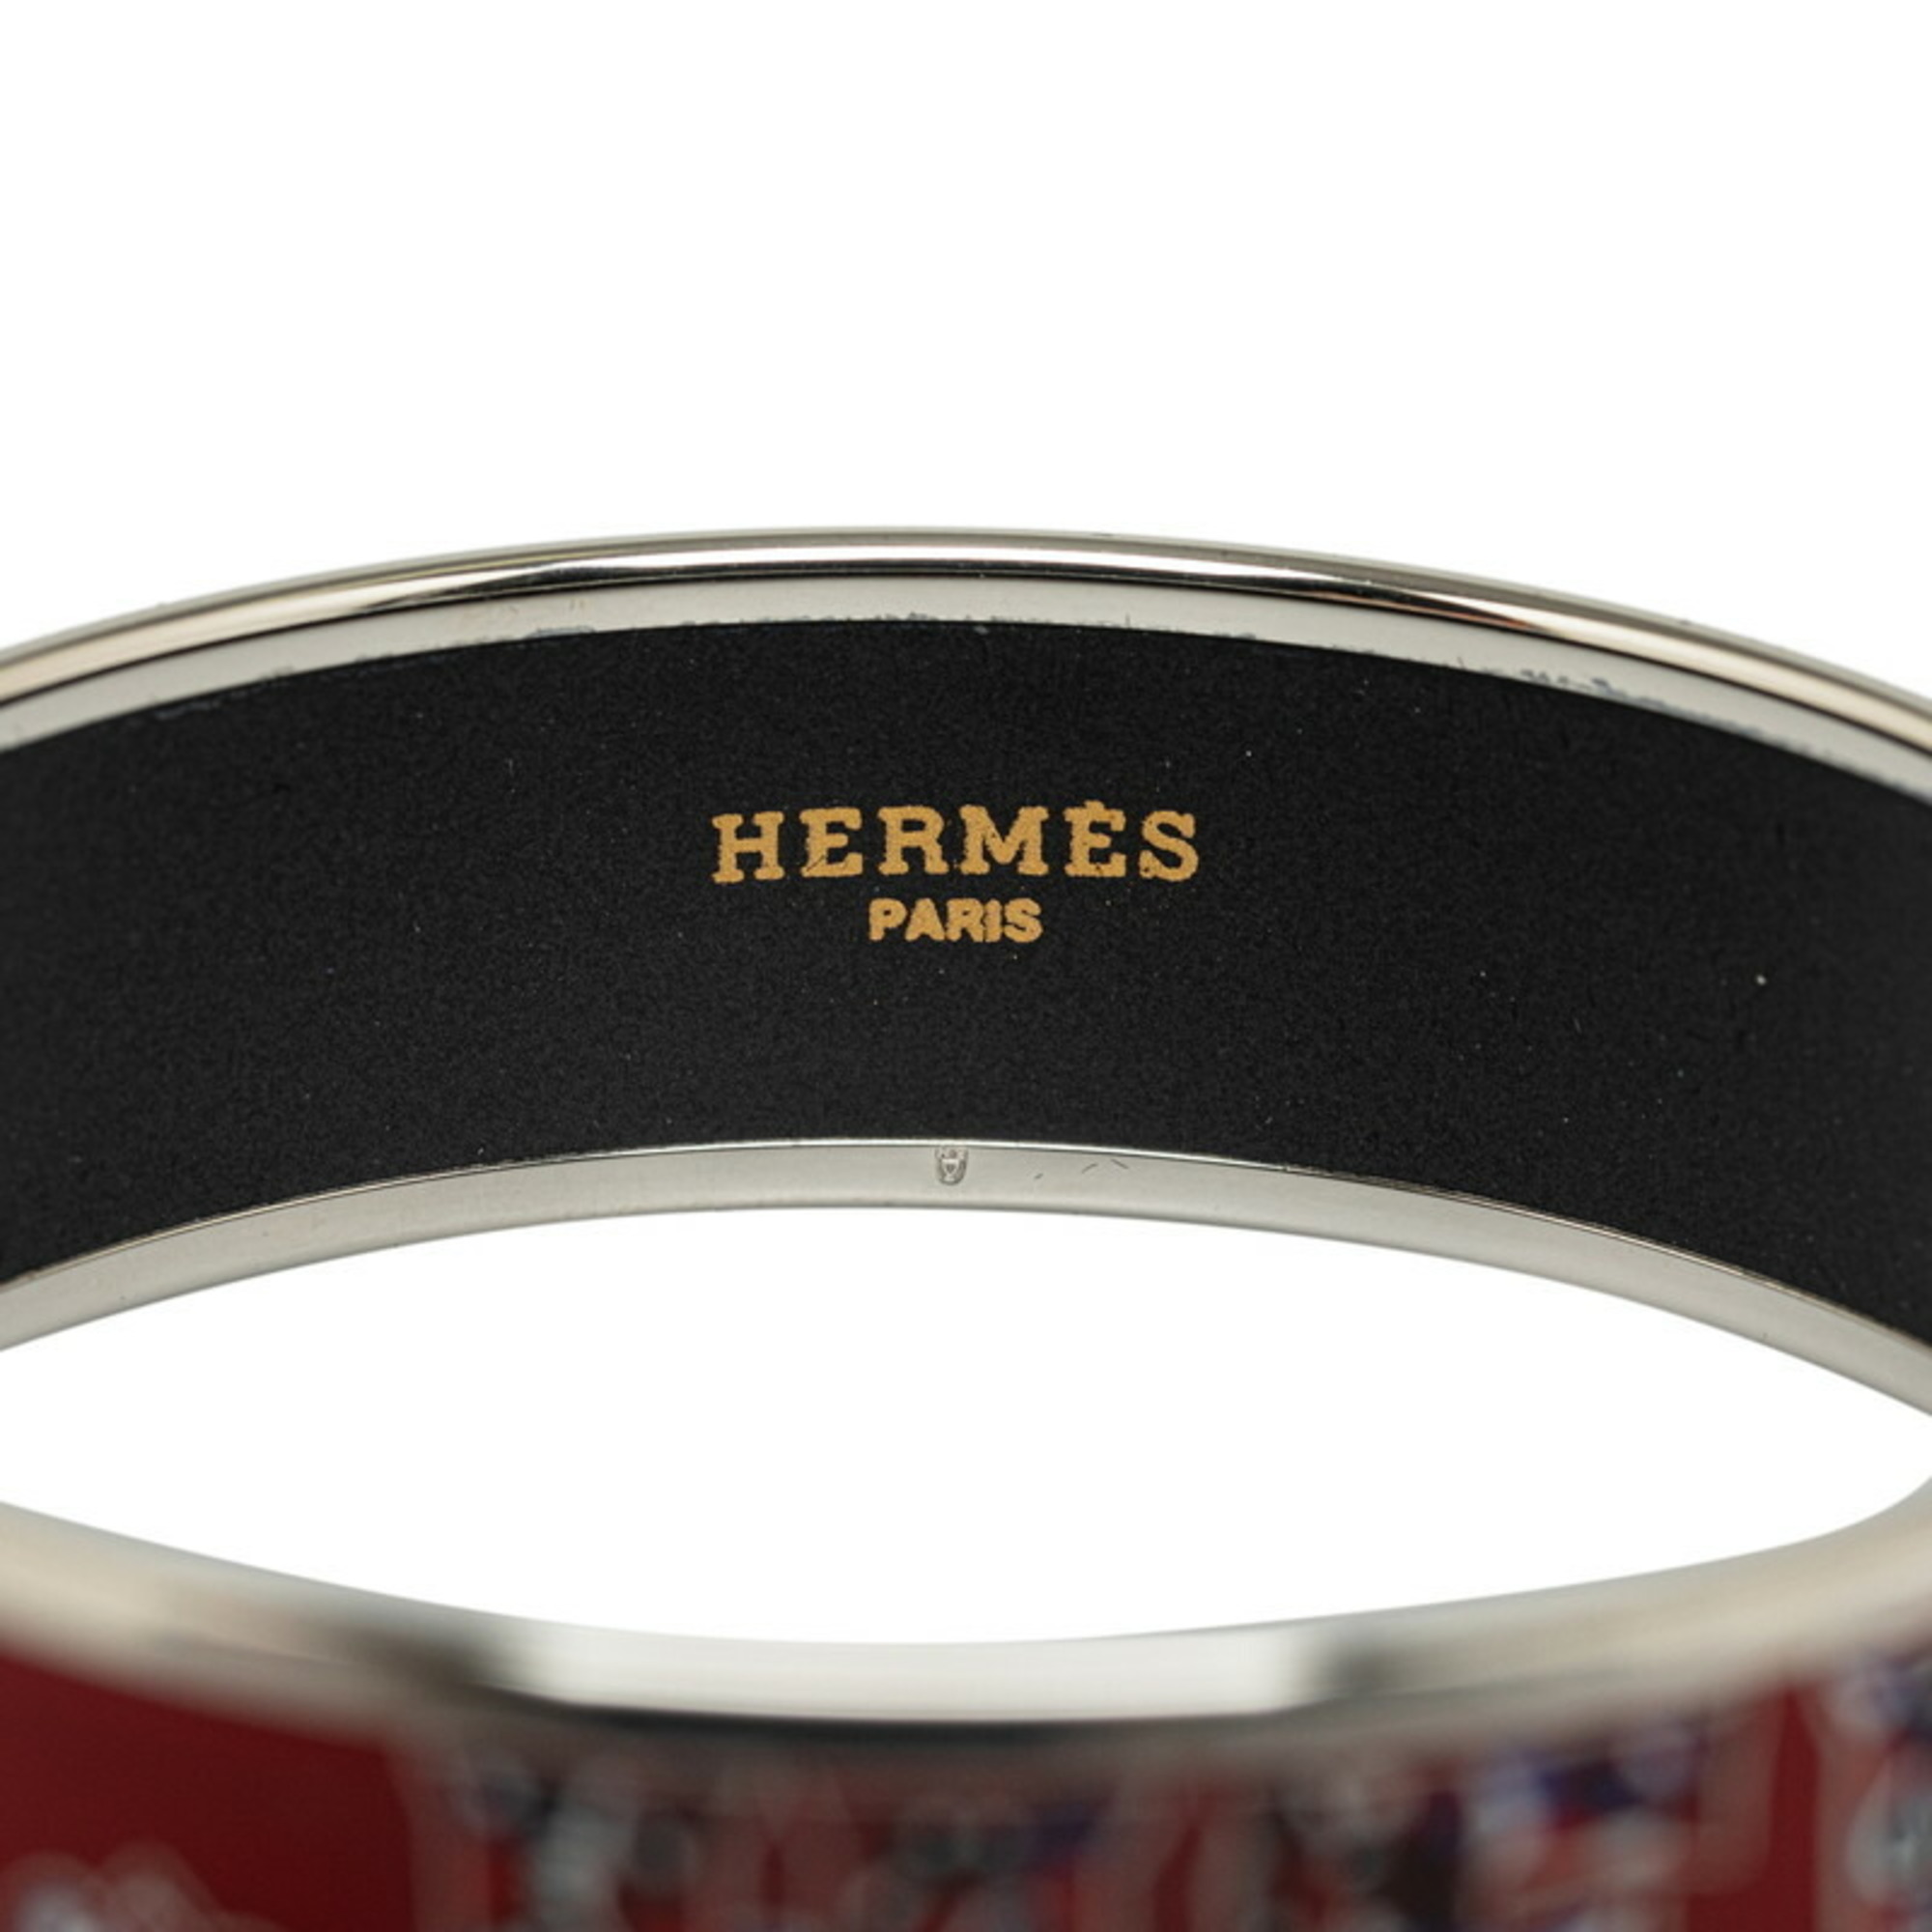 Hermes enamel GM cloisonné bangle silver wine red metal women's HERMES